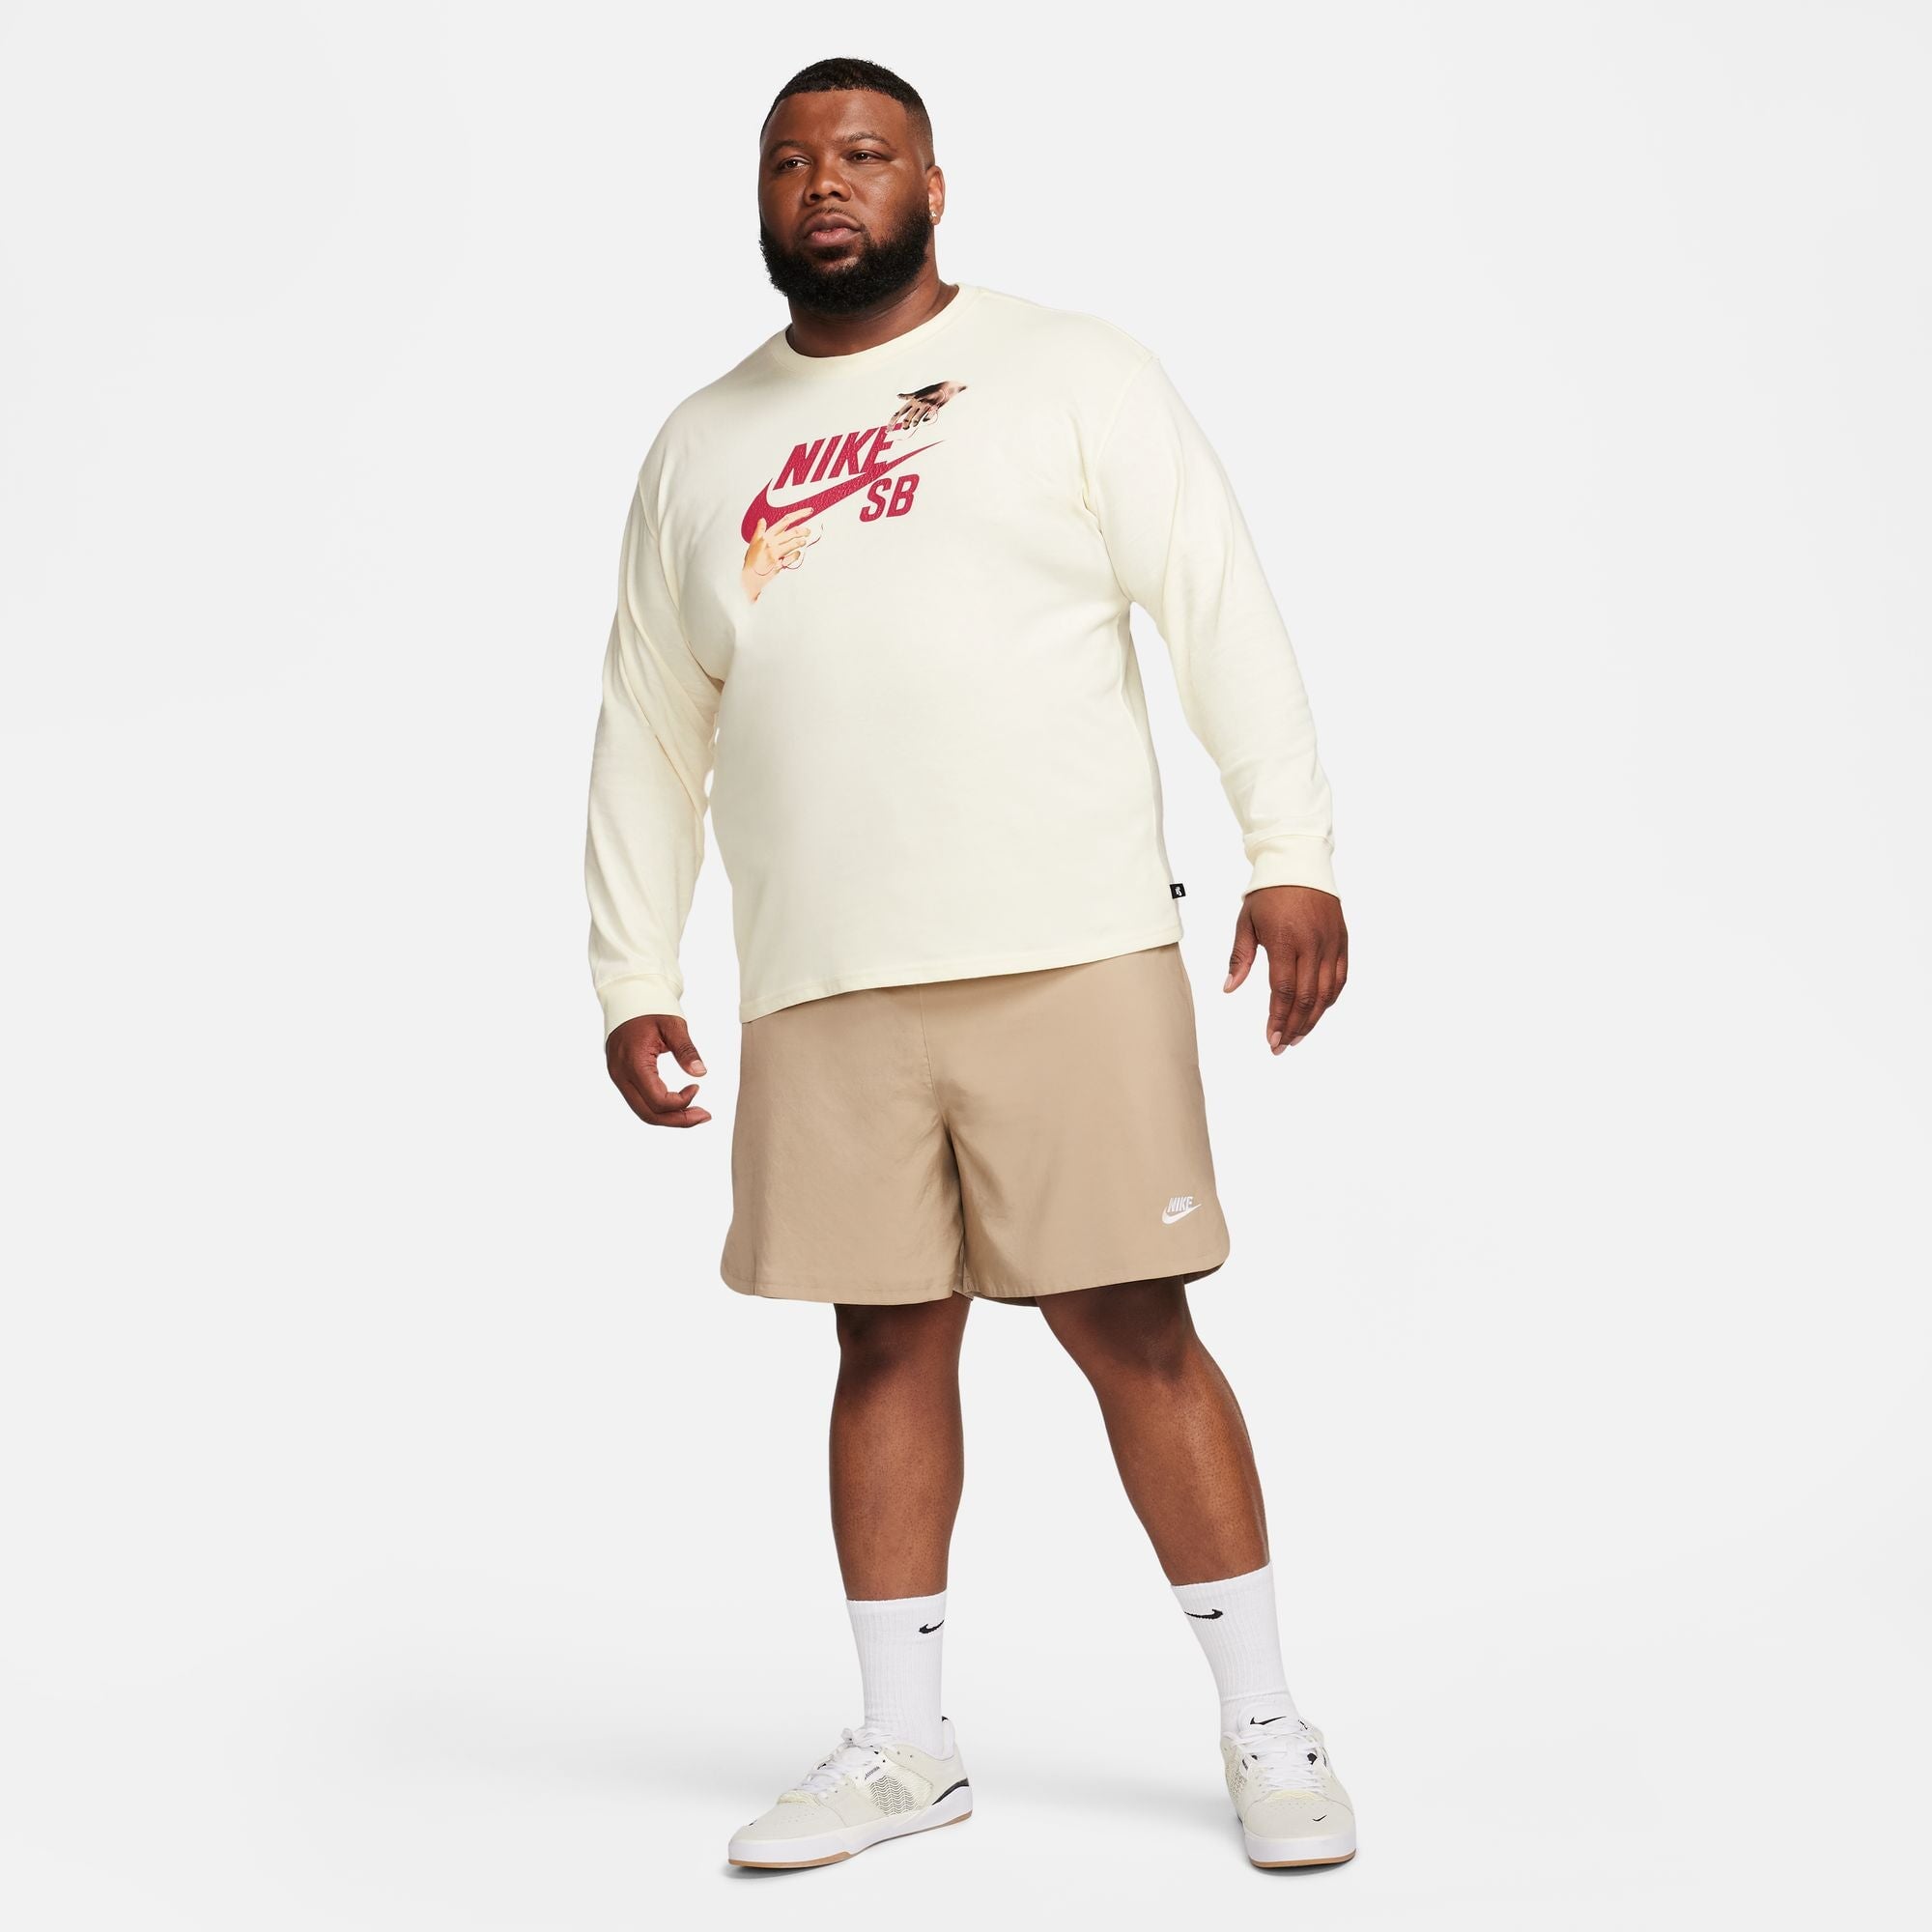 Nike SB Long Sleeve "City of Love" Shirt Herren Langarm-Shirt Nike Skateboarding 